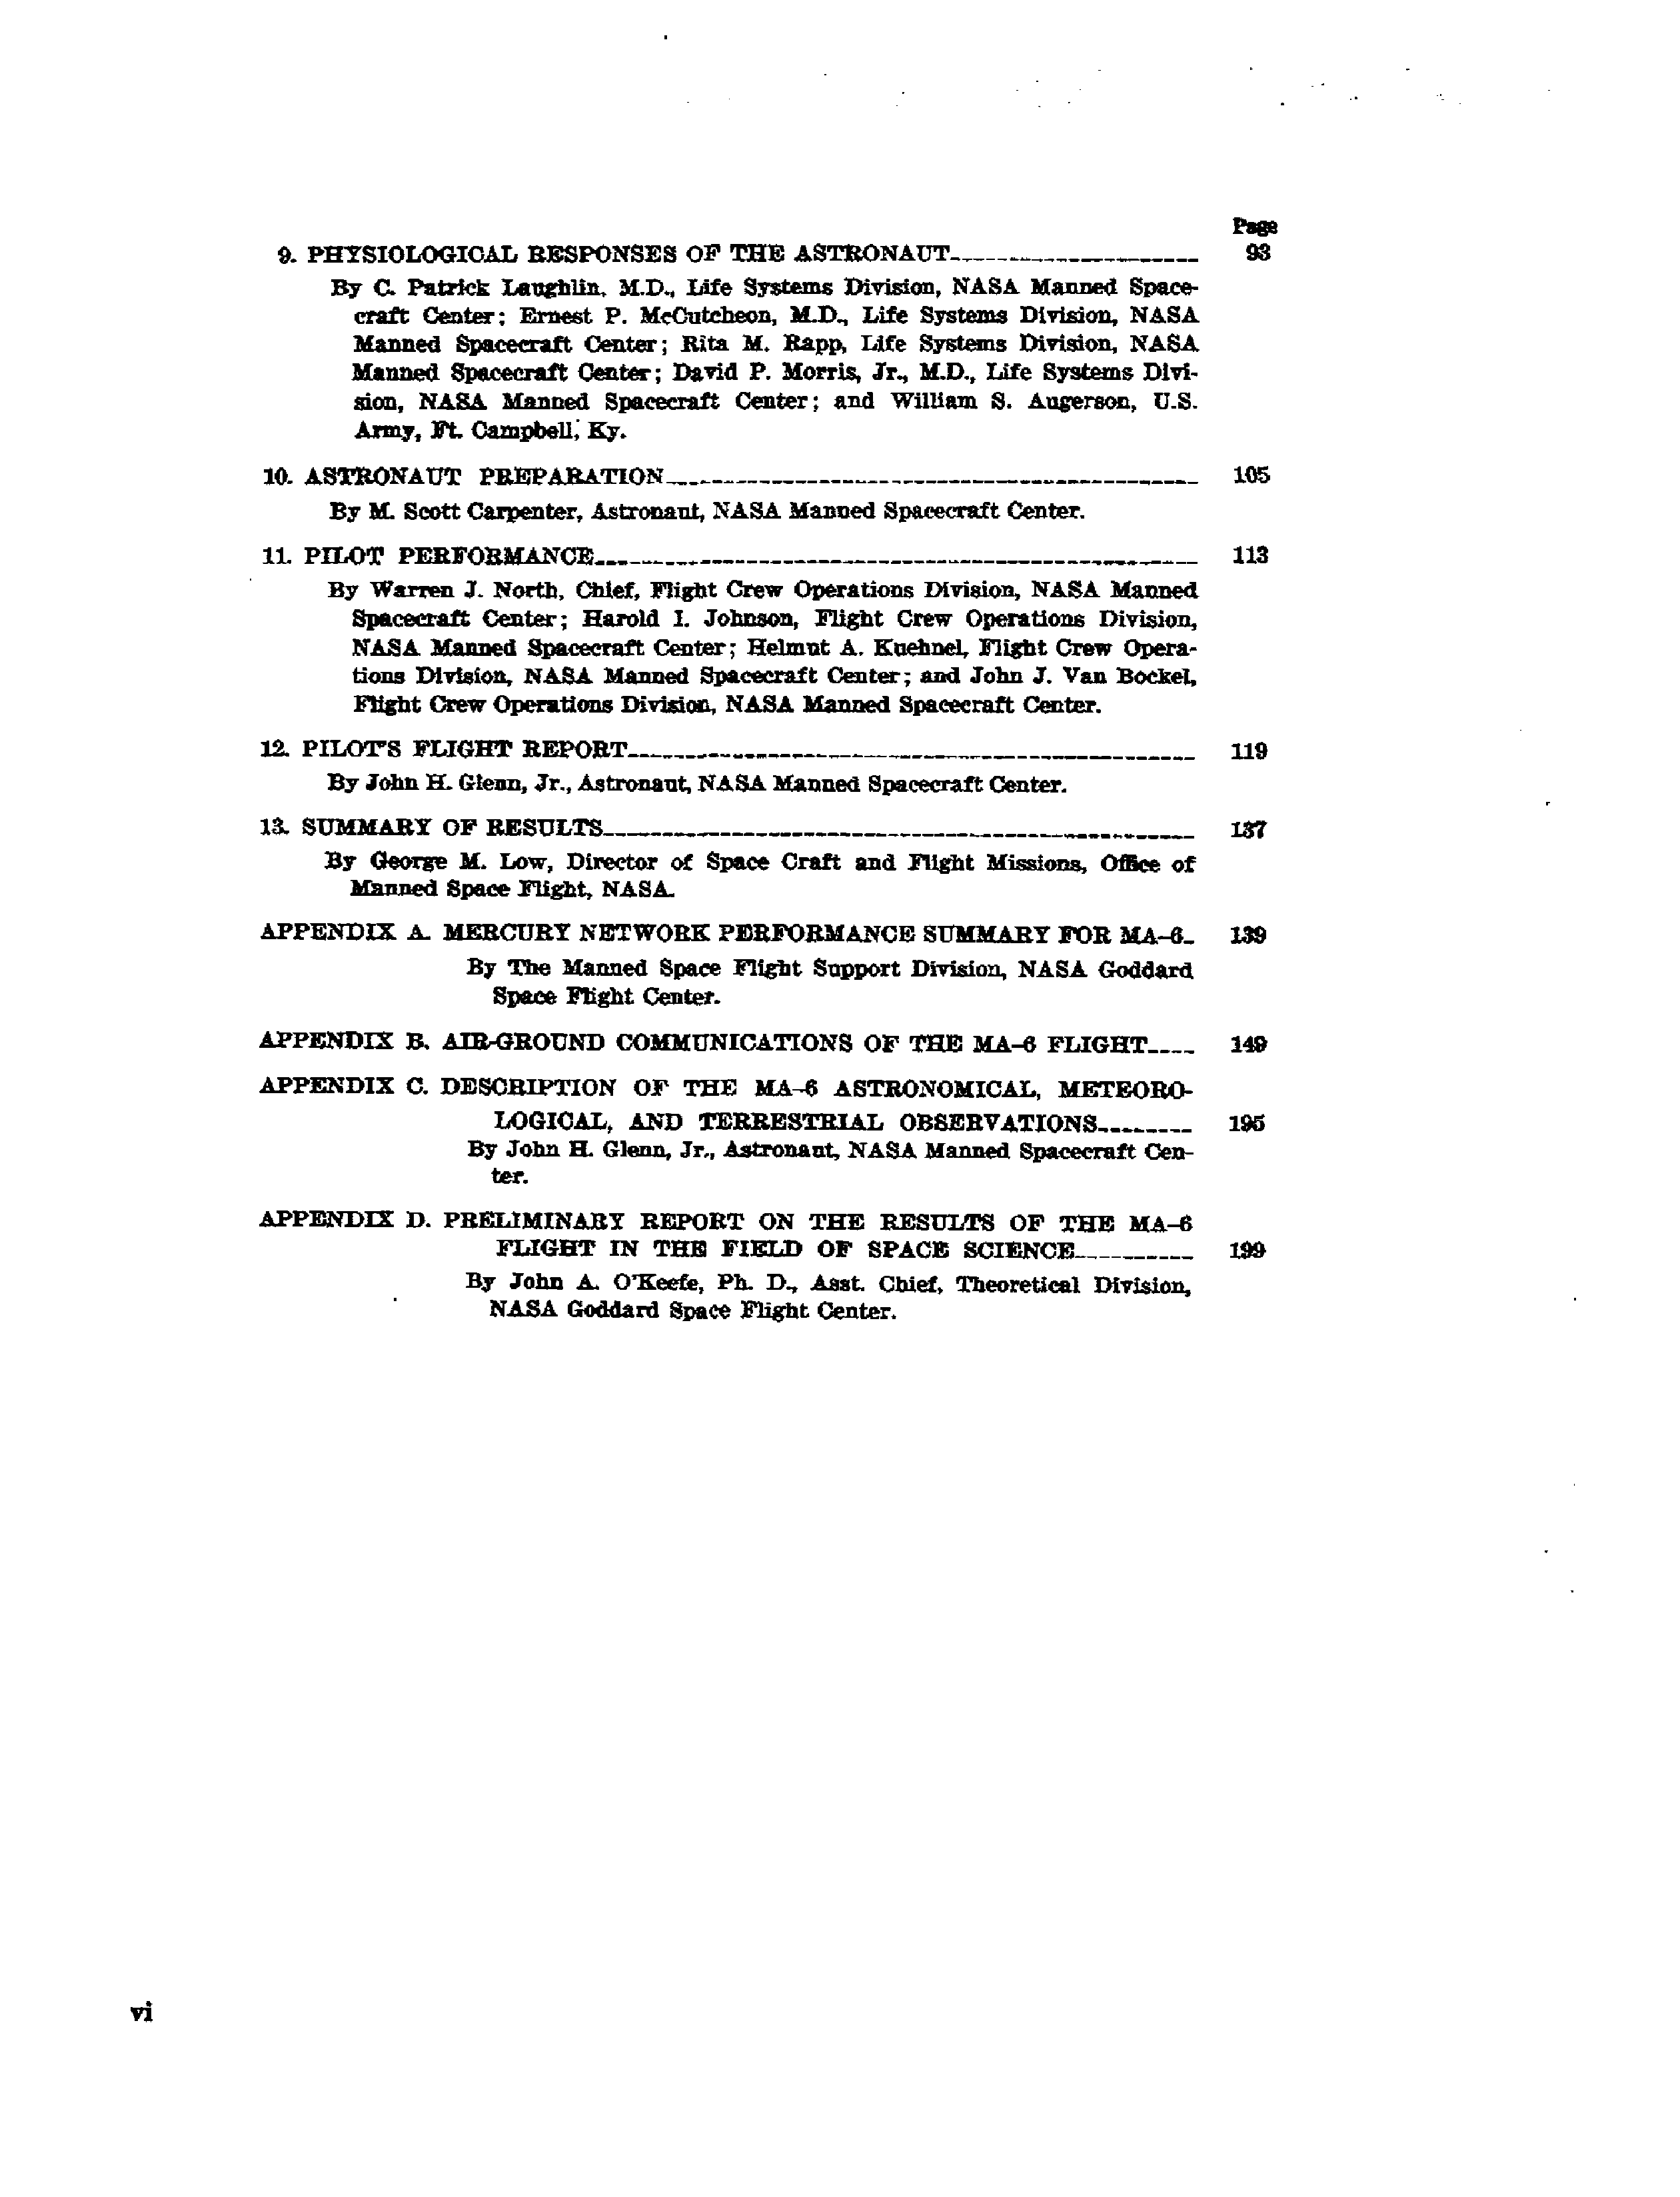 Page 5 of Mercury 6’s original transcript